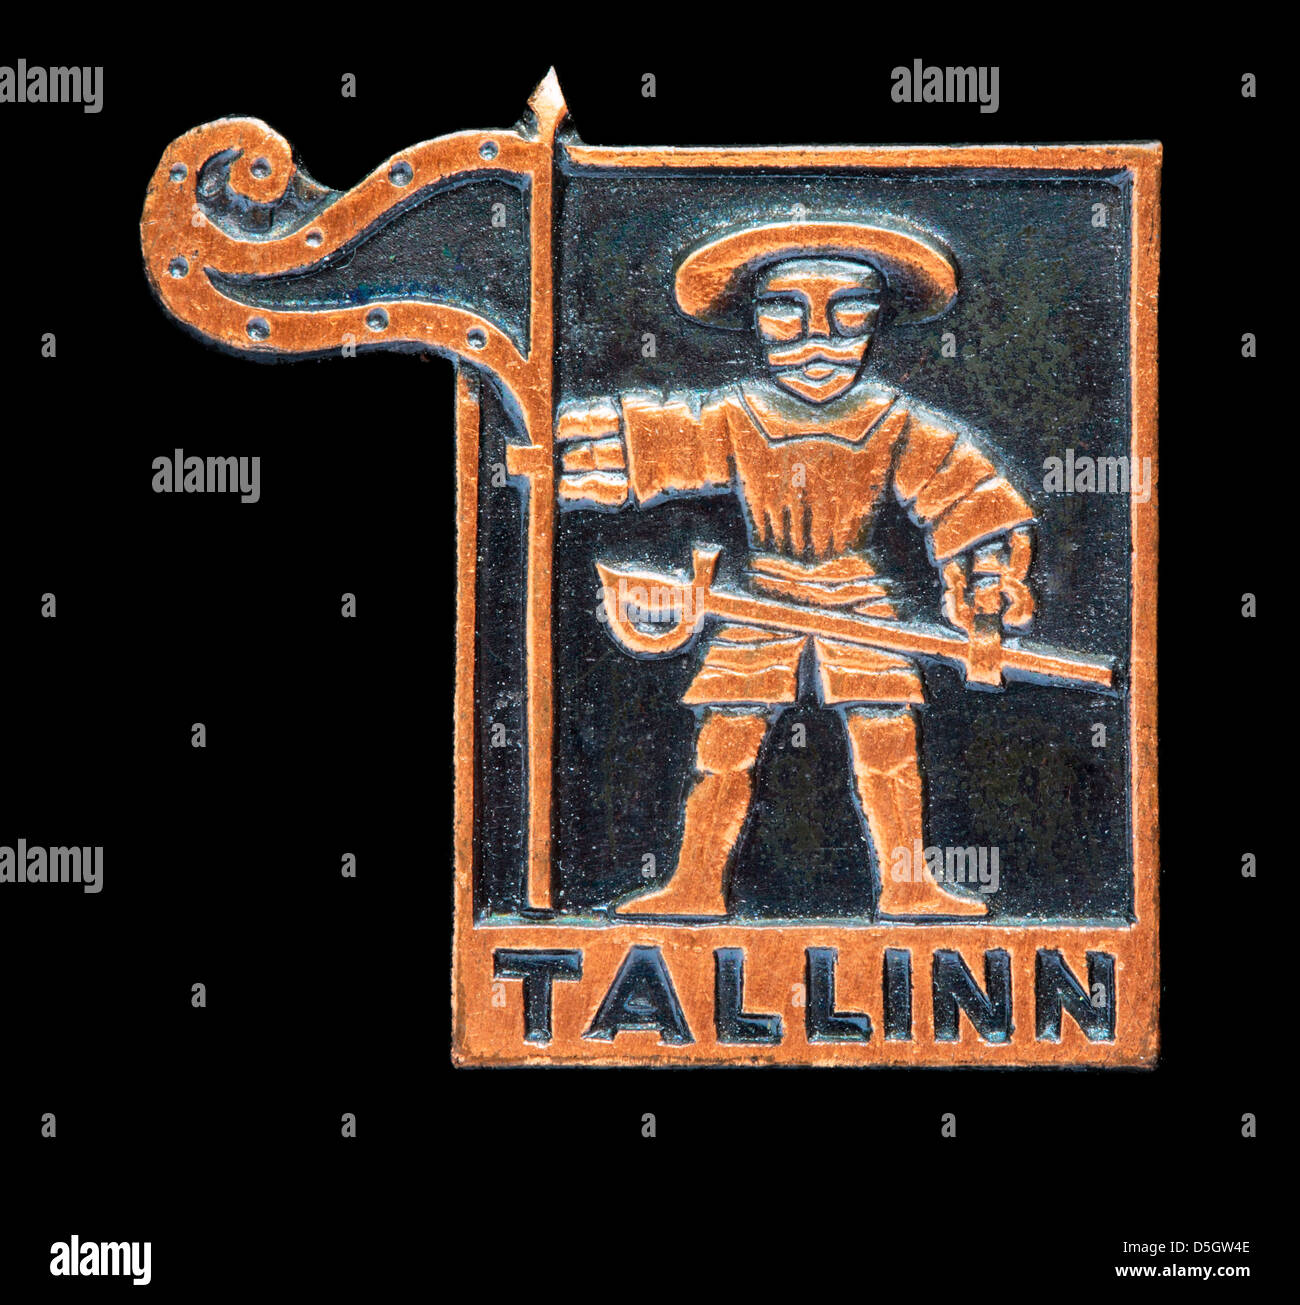 Tallinn, Estonia, pin badge Stock Photo